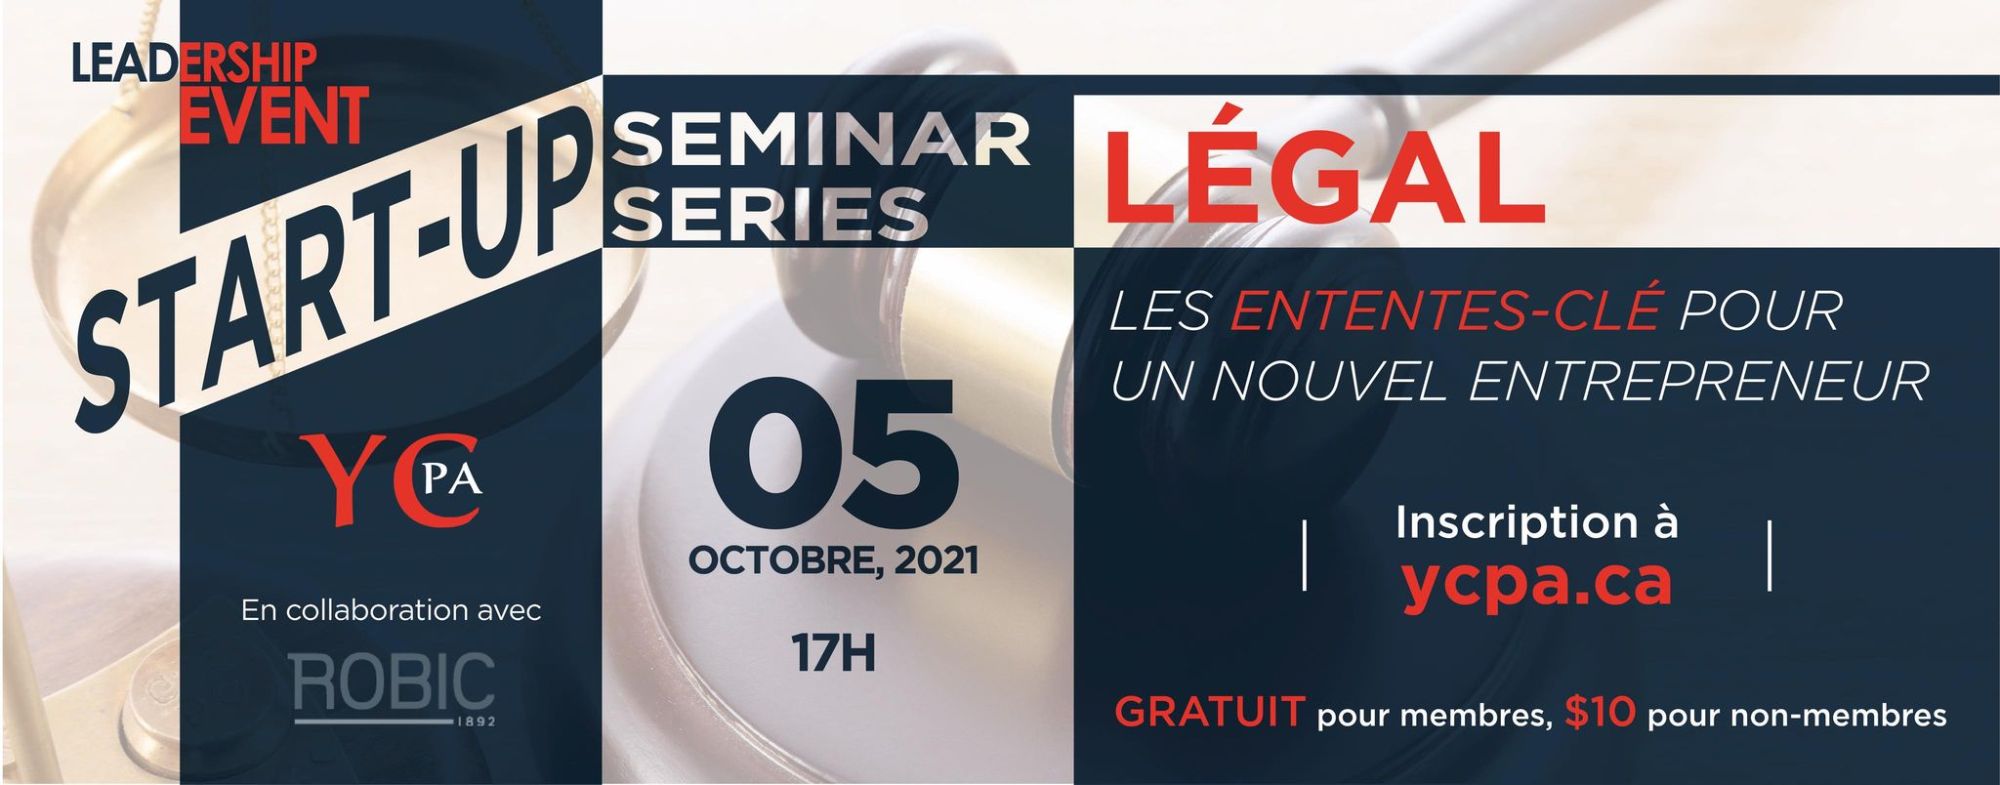 Leadership Event - Startup Seminar Series - Legal